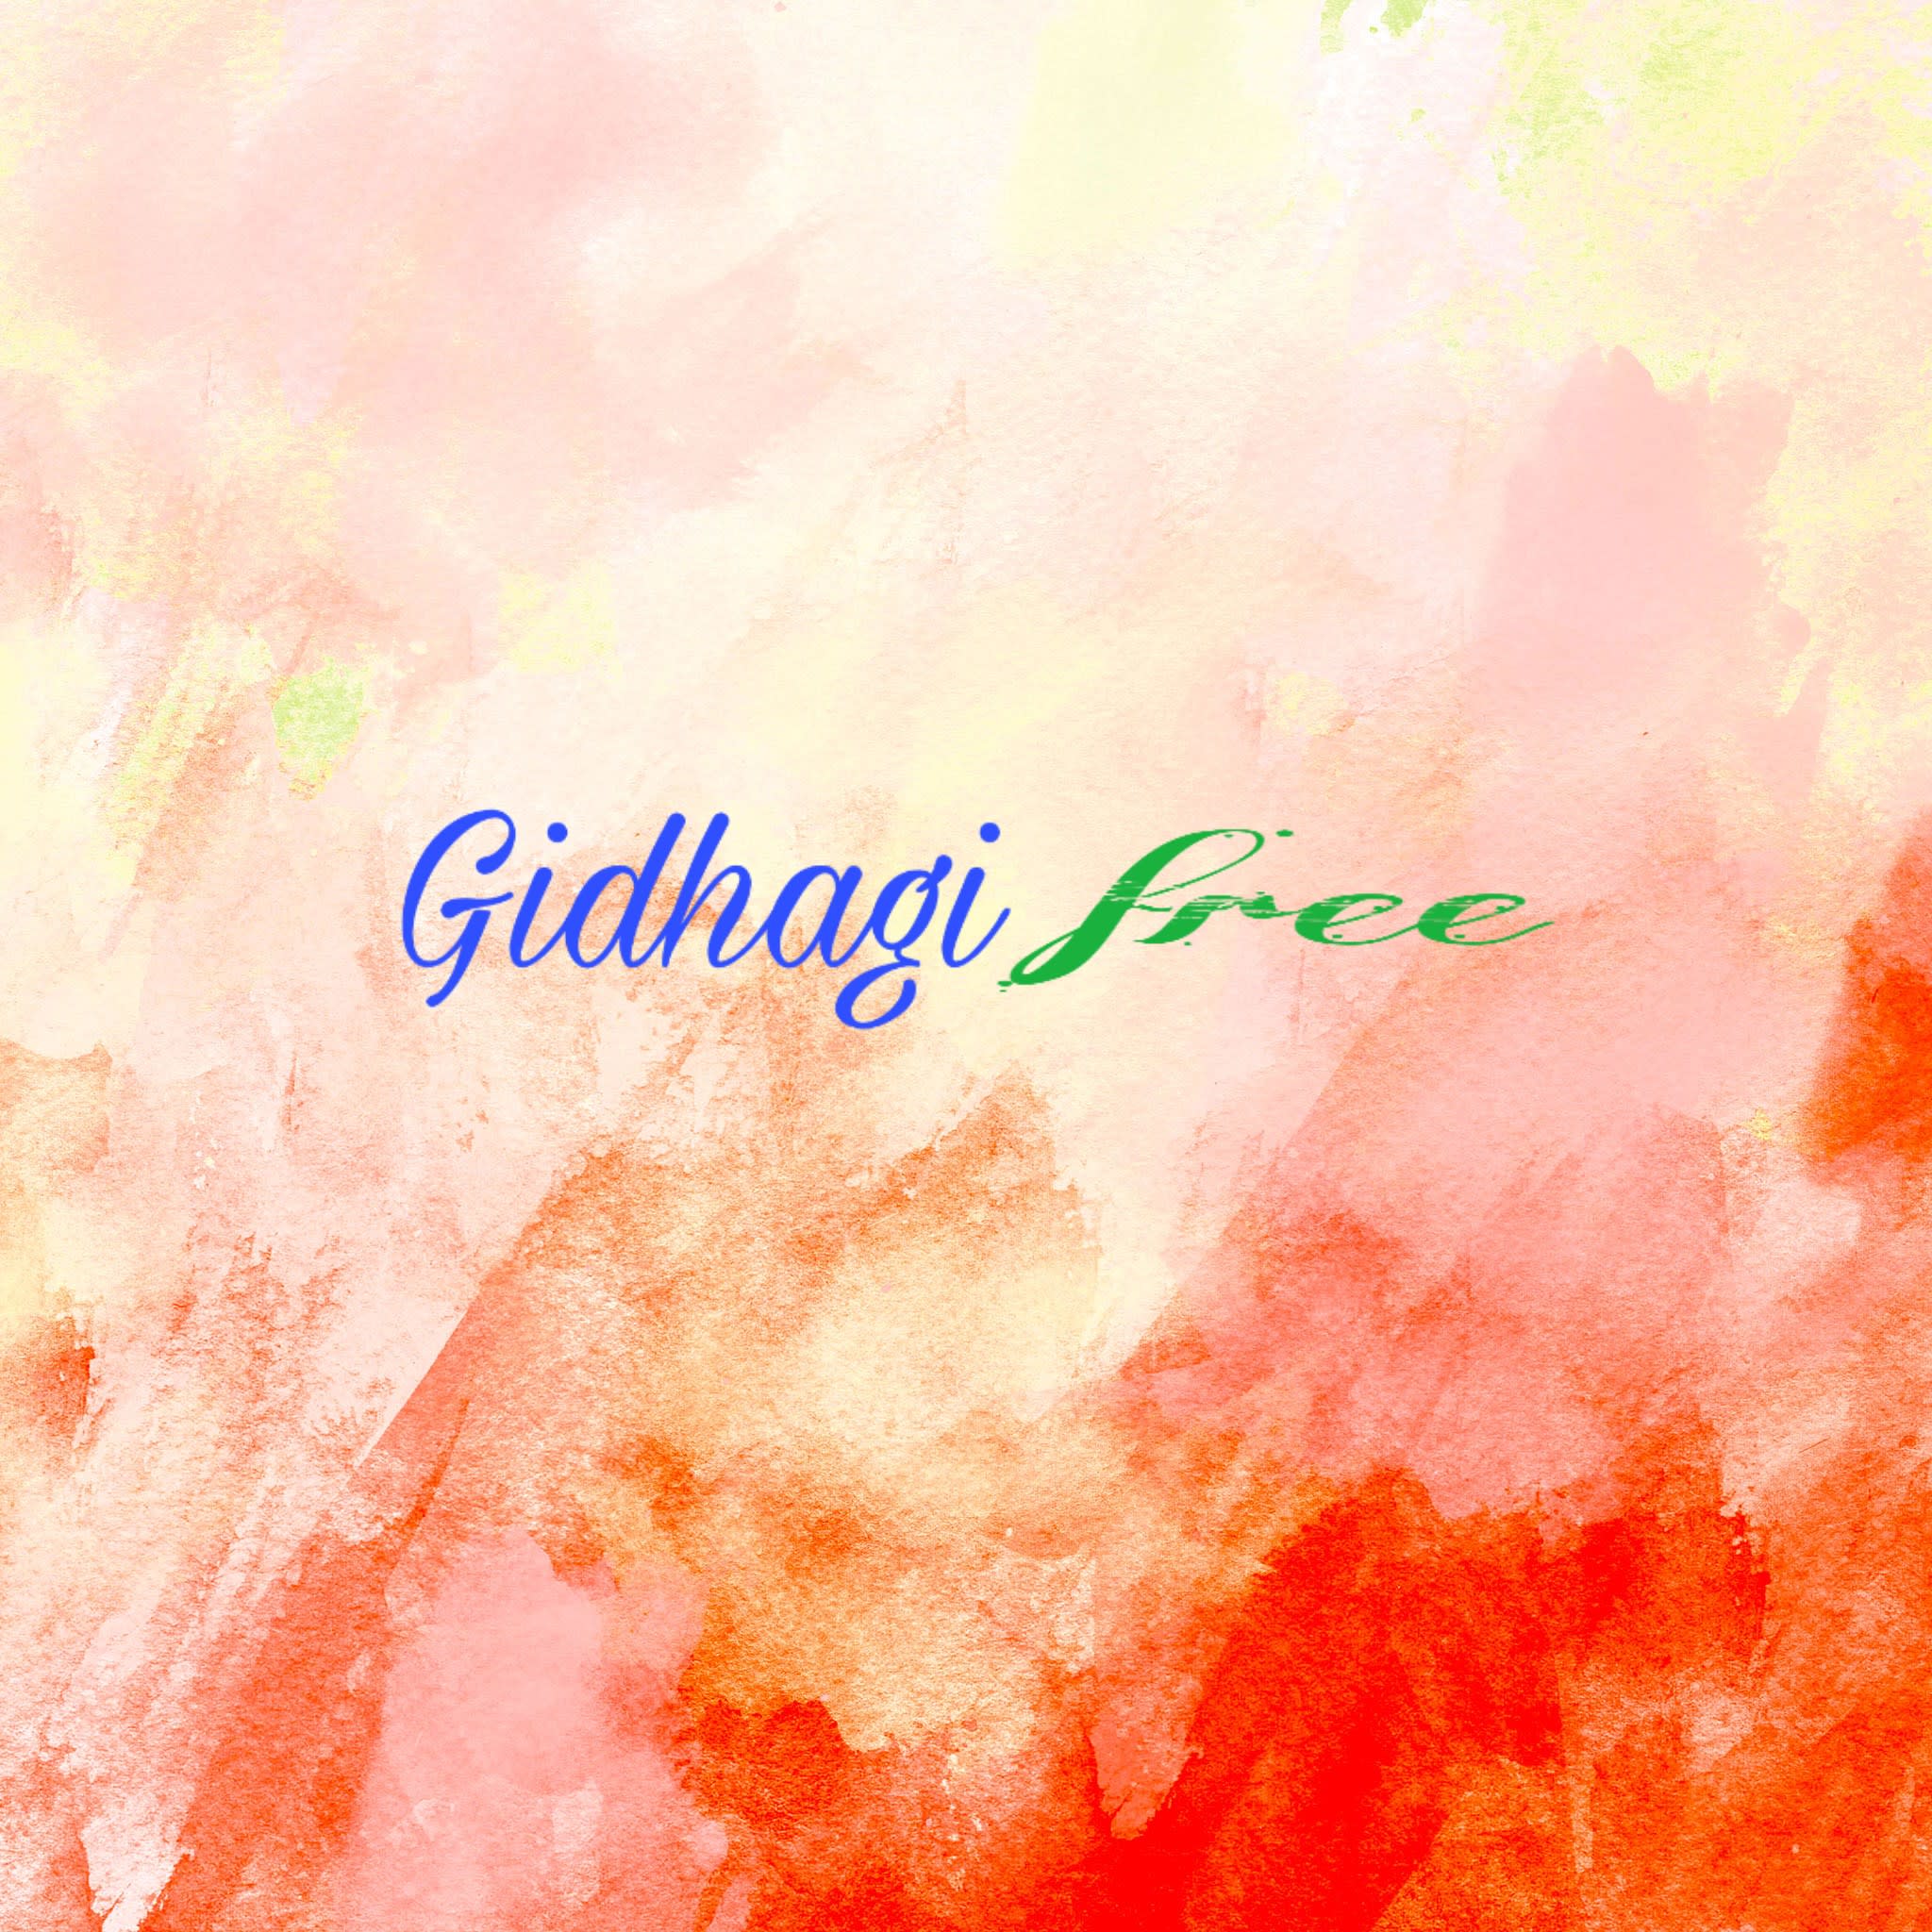 Gindhagi Free